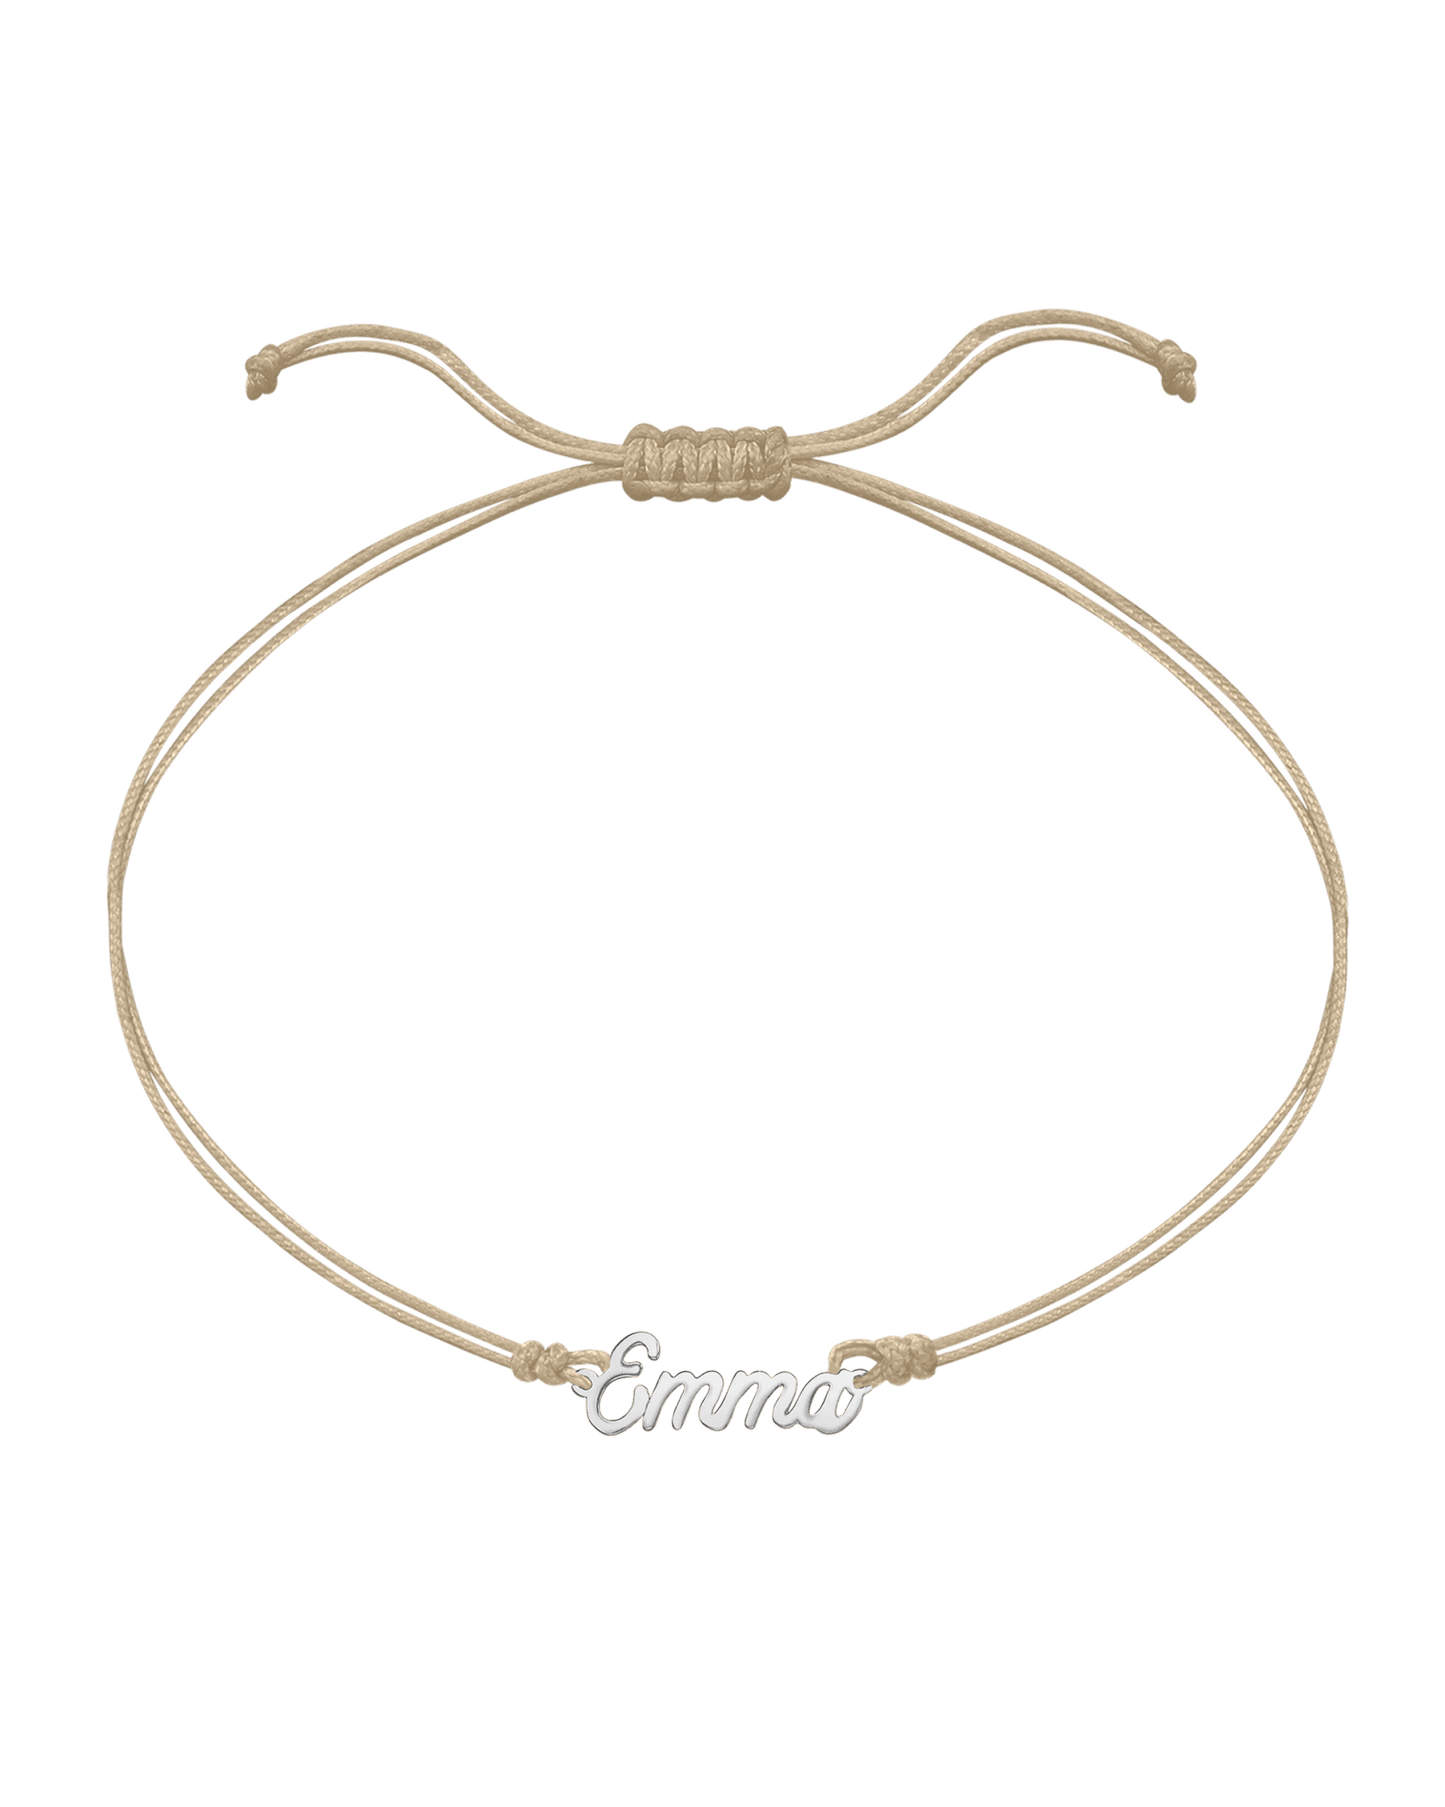 Name Plate String of Love - 14K White Gold Bracelets 14K Solid Gold Sand 1 